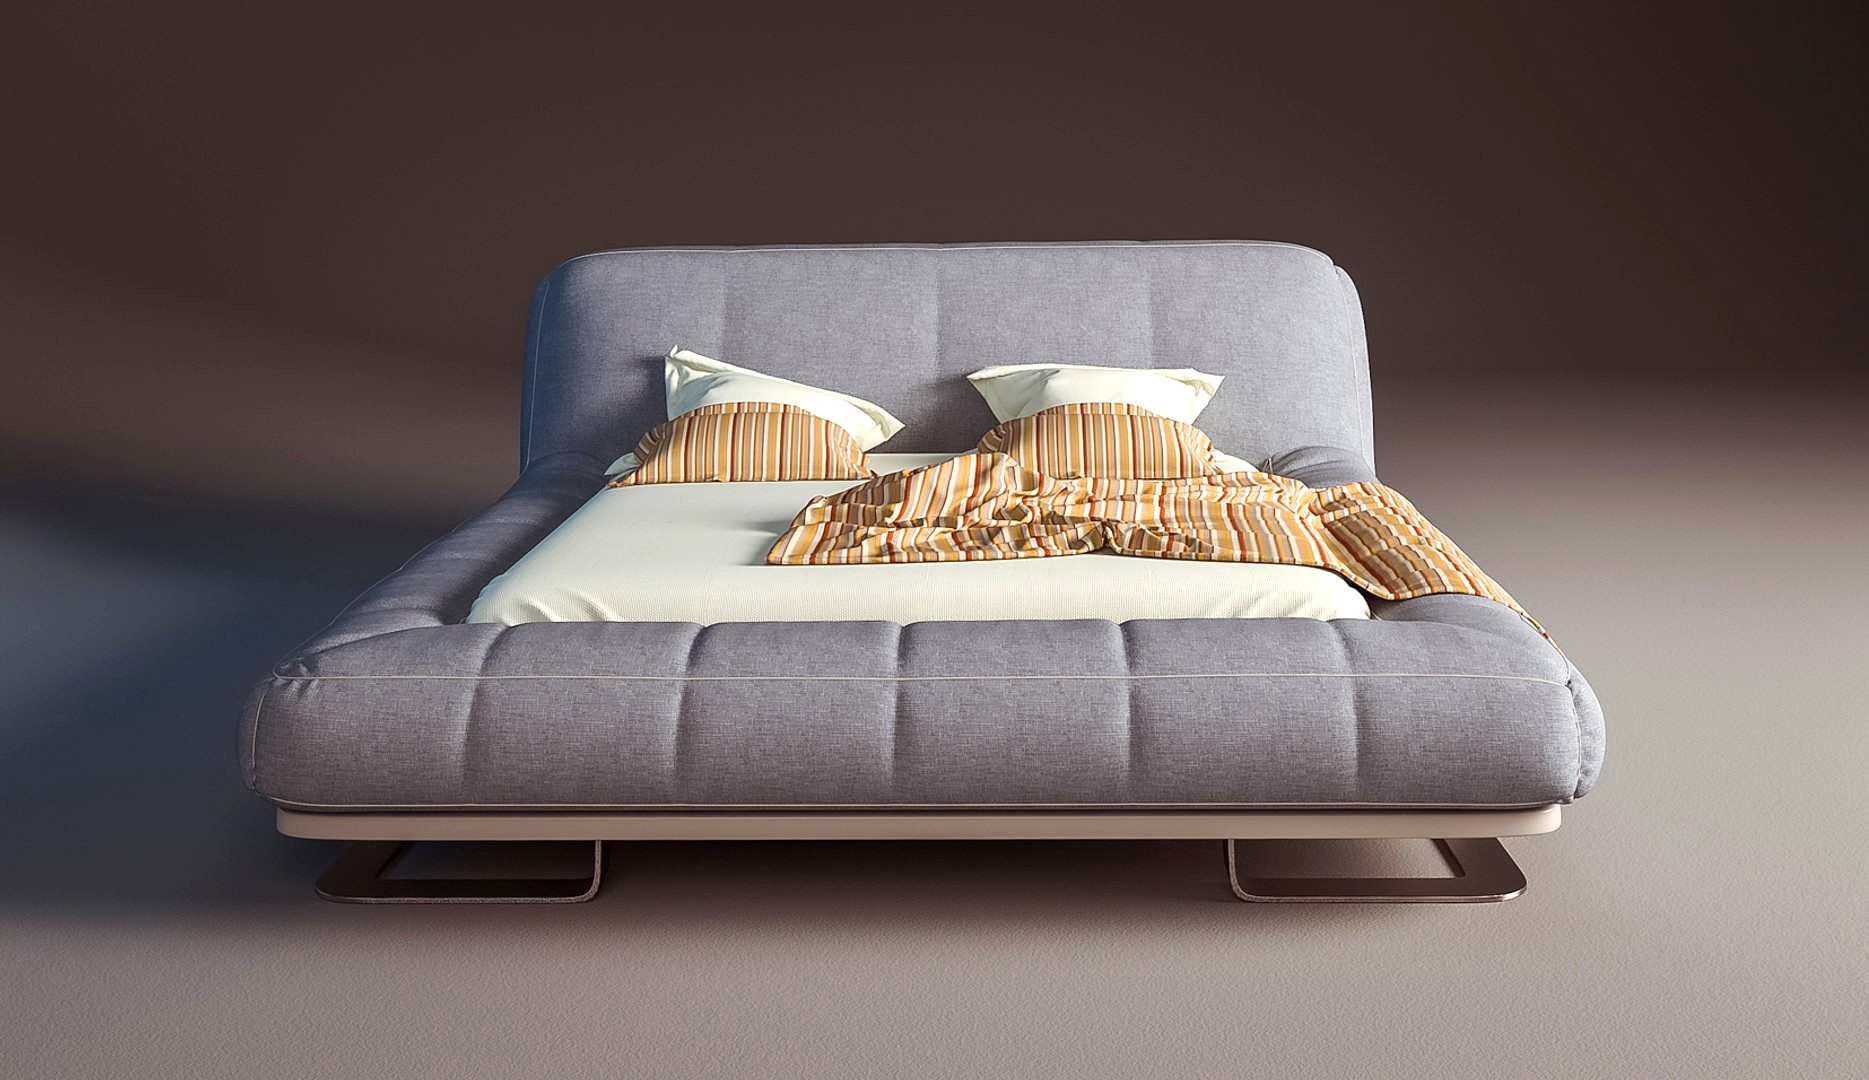 Conceptual Bed